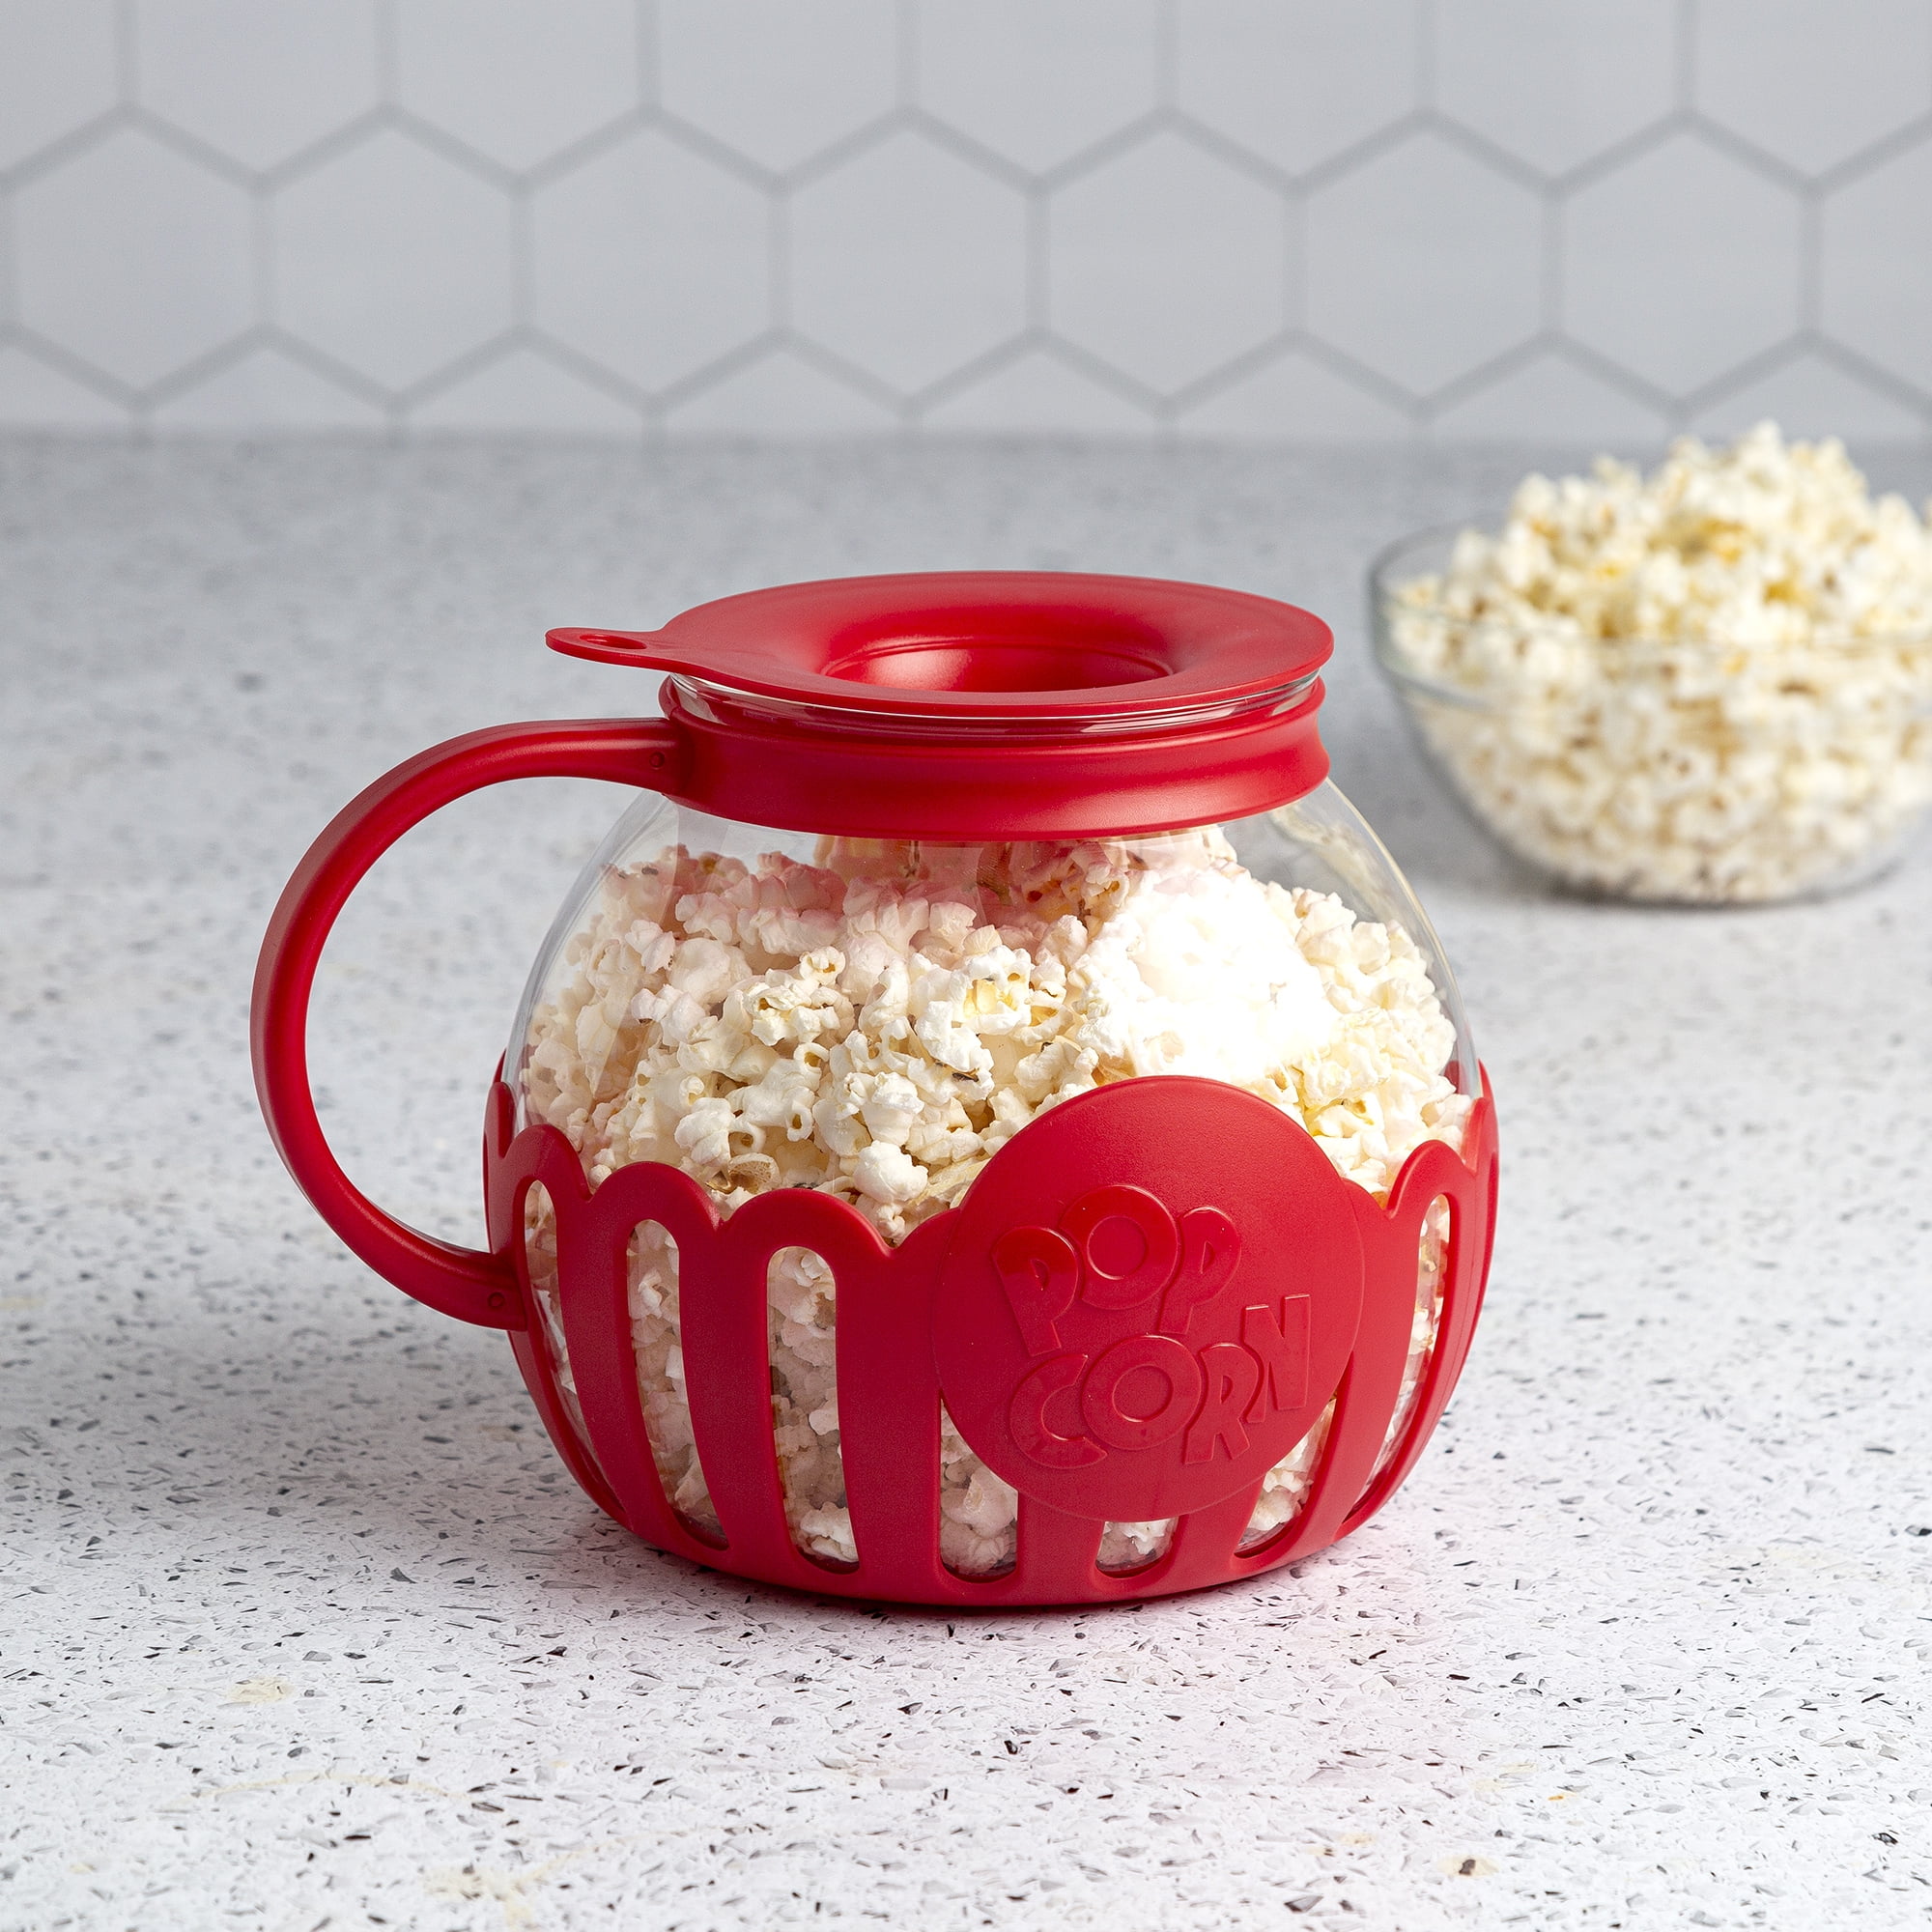 Tasty 3QT Family Size Microwave Popcorn Popper, Dishwasher Safe